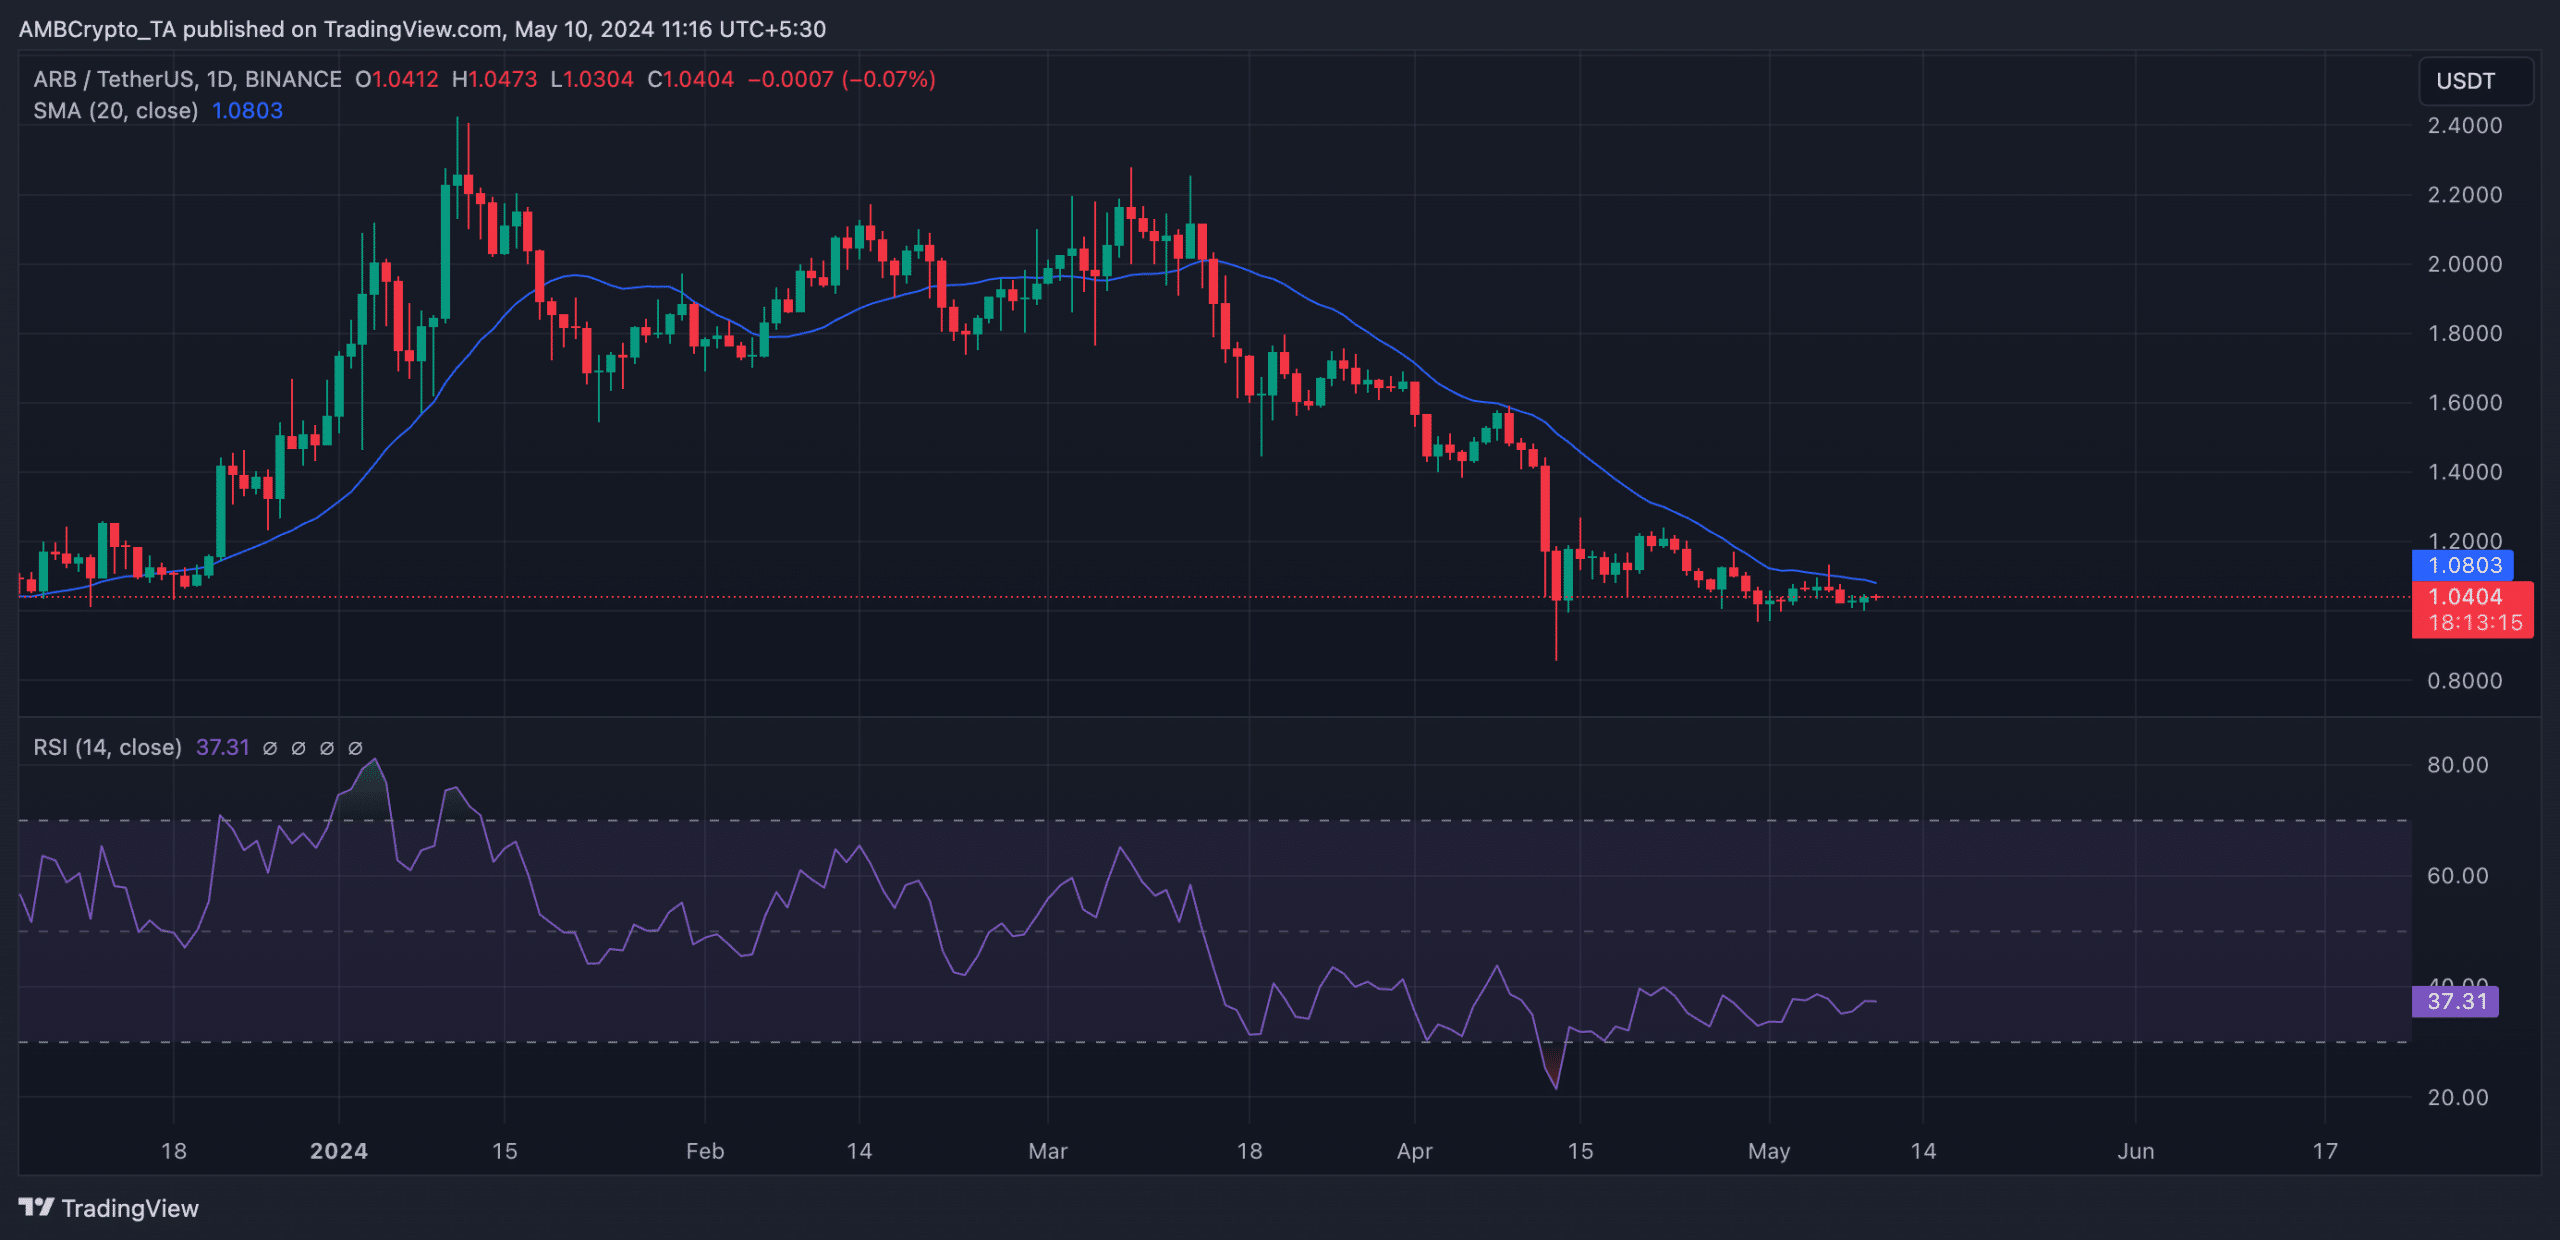 ARB 1-Day Chart TradingView